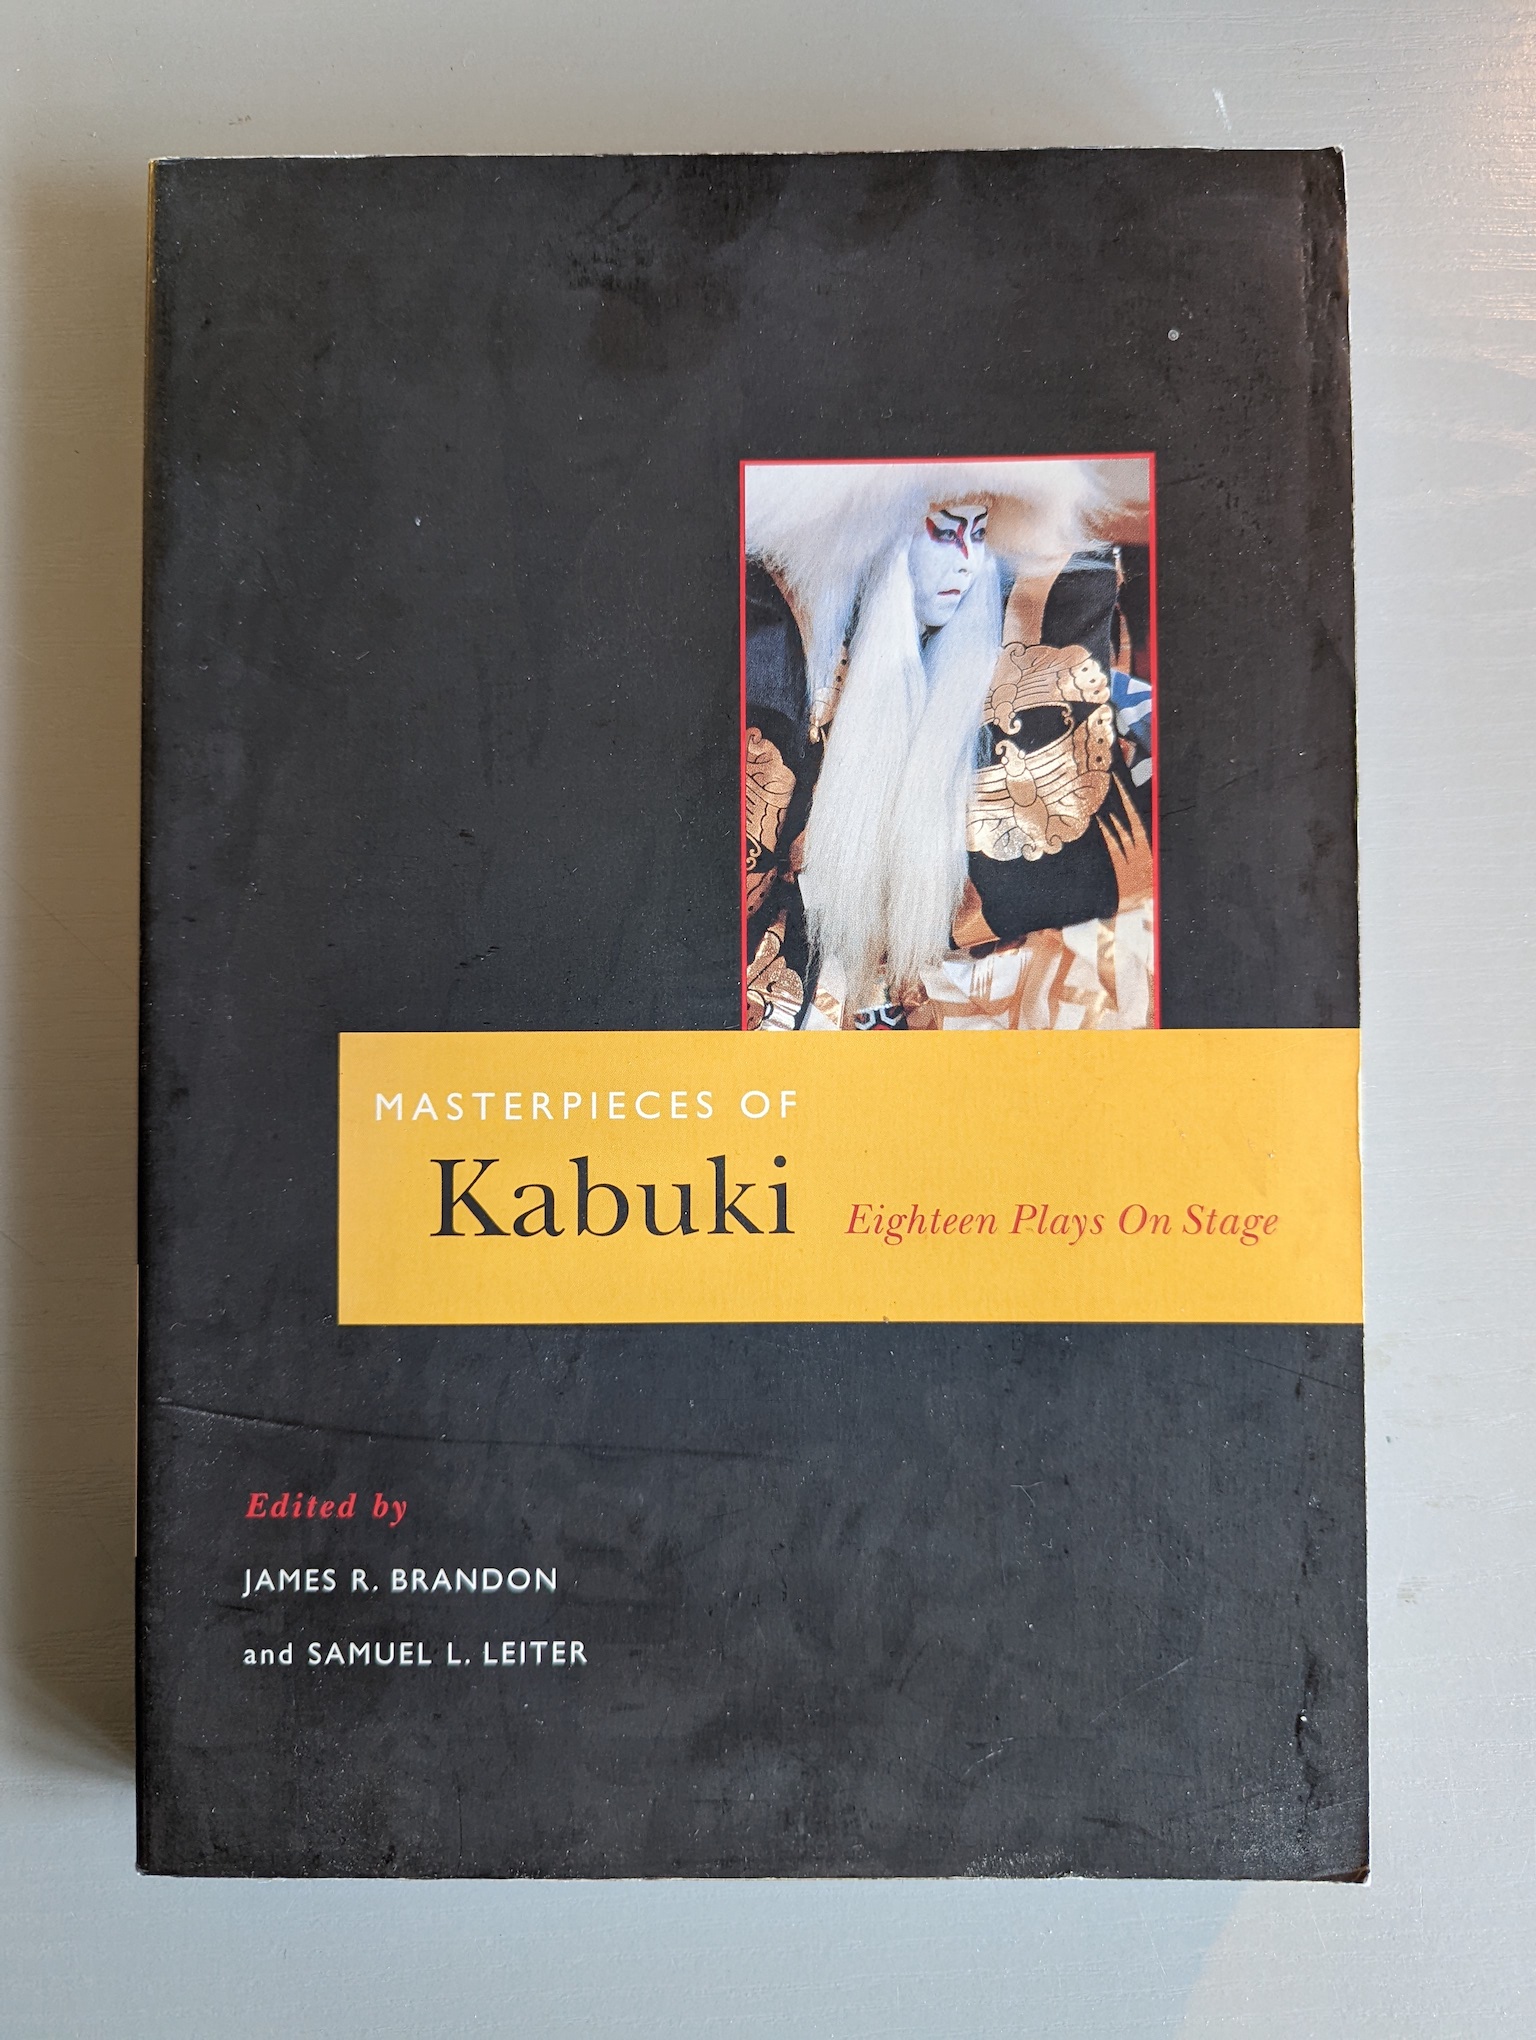 BOOK: Masterpieces of Kabuki – Eighteen Plays on Stage